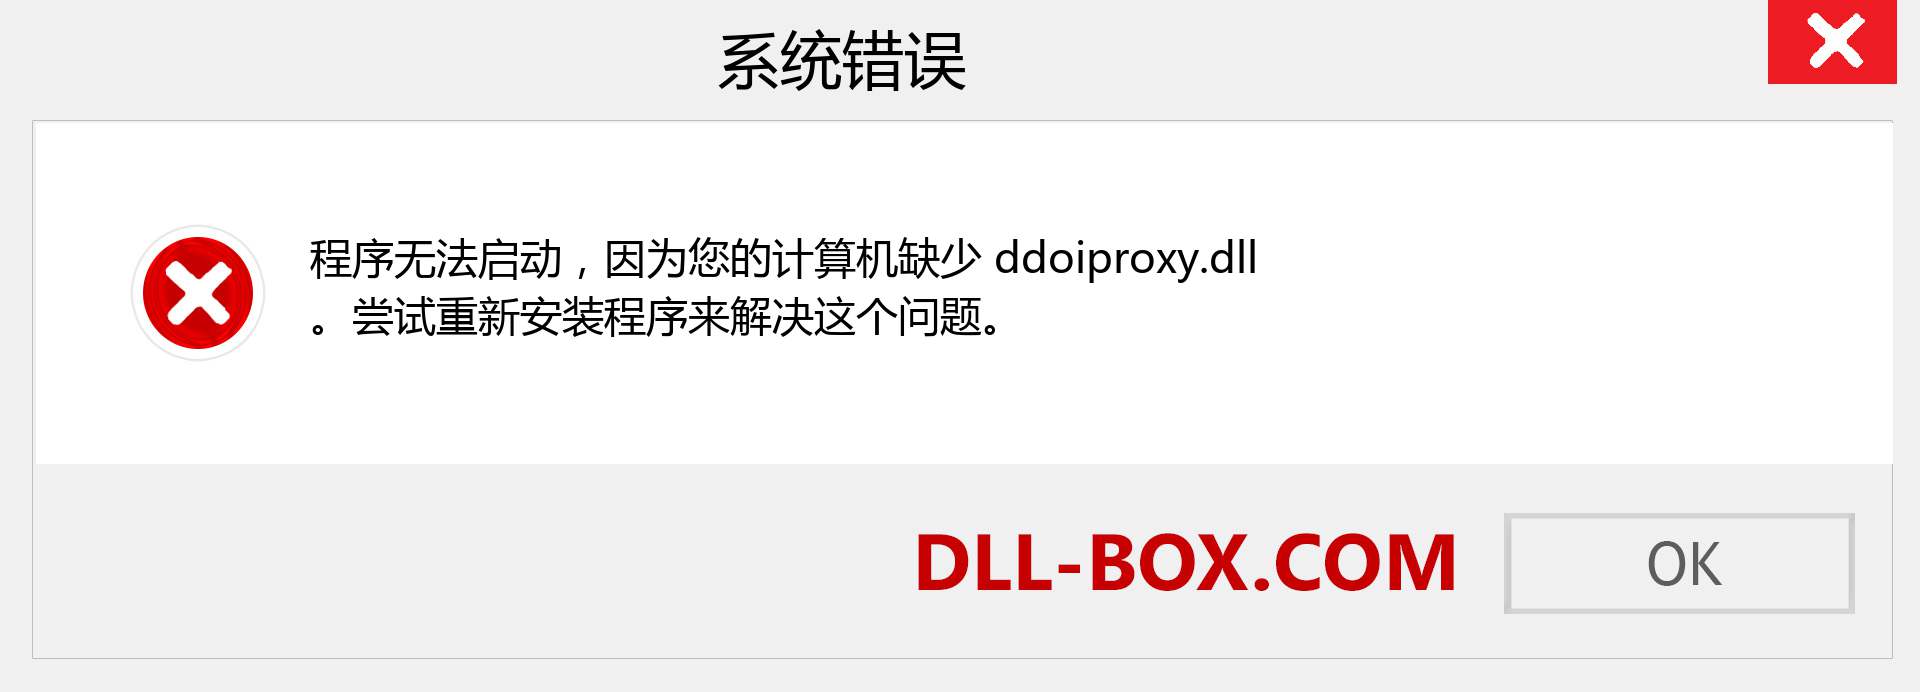 ddoiproxy.dll 文件丢失？。 适用于 Windows 7、8、10 的下载 - 修复 Windows、照片、图像上的 ddoiproxy dll 丢失错误